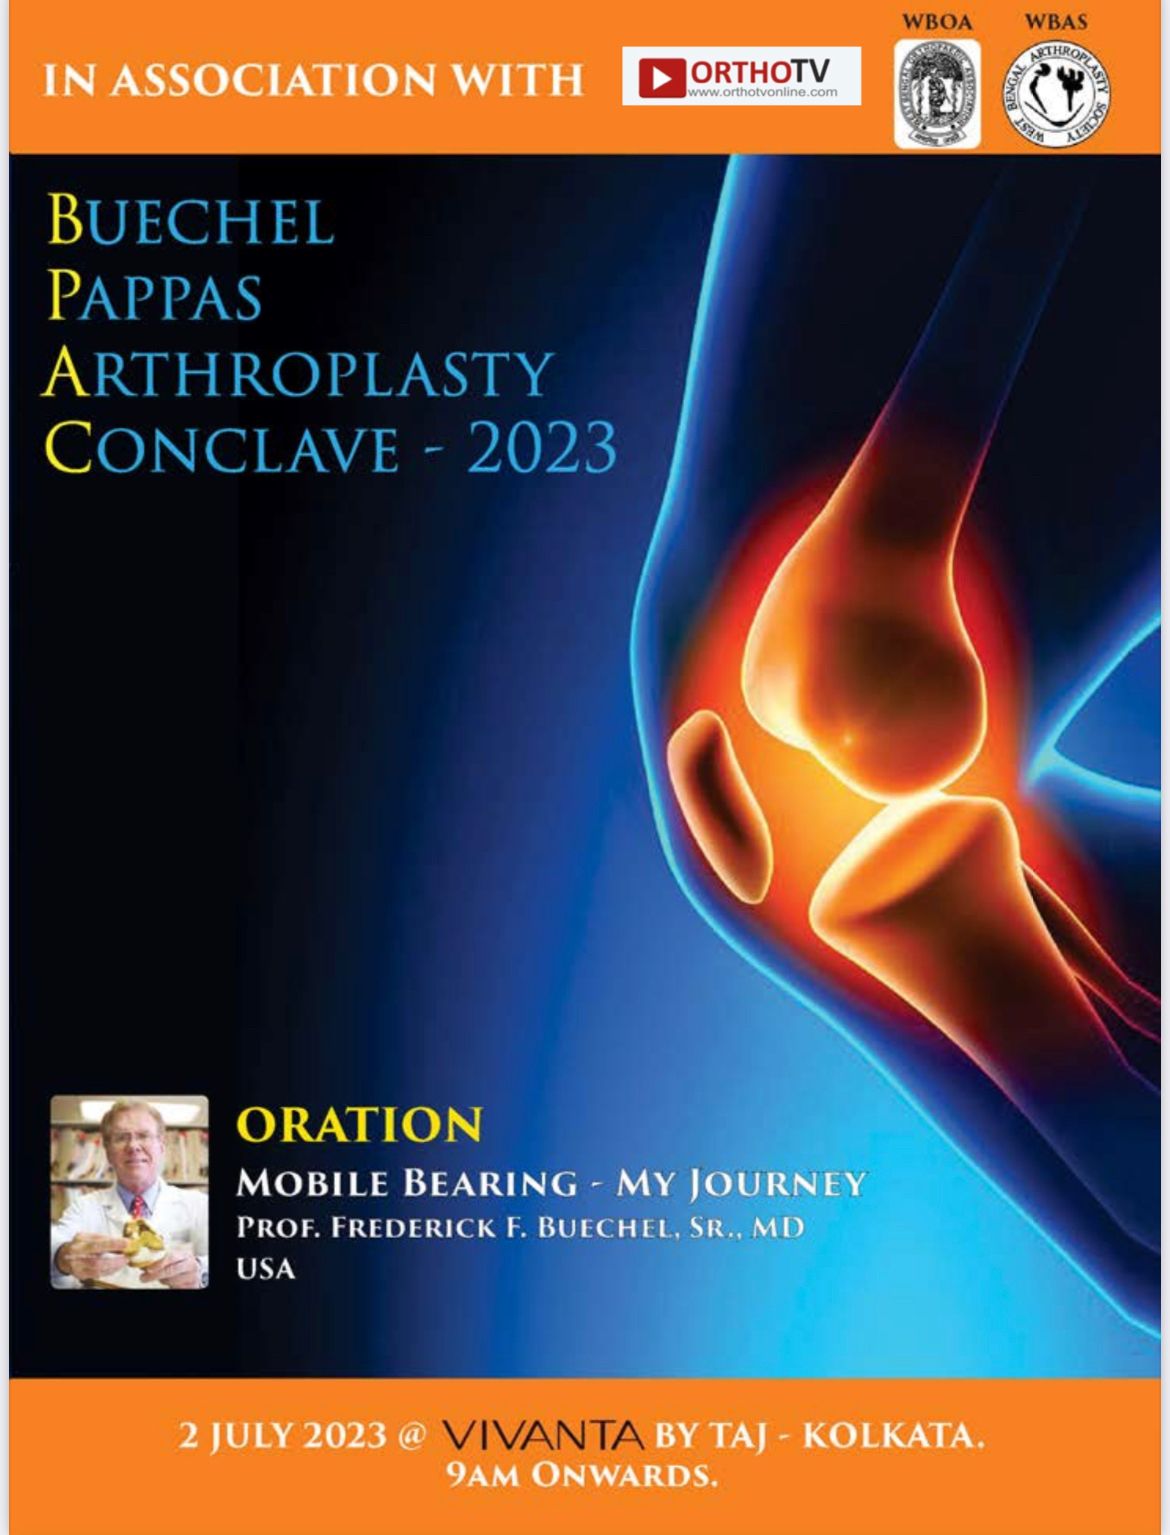 BPAC-2023 - BEUCHEL PAPPAS ARTHROPLASTY CONCLAVE - 2023